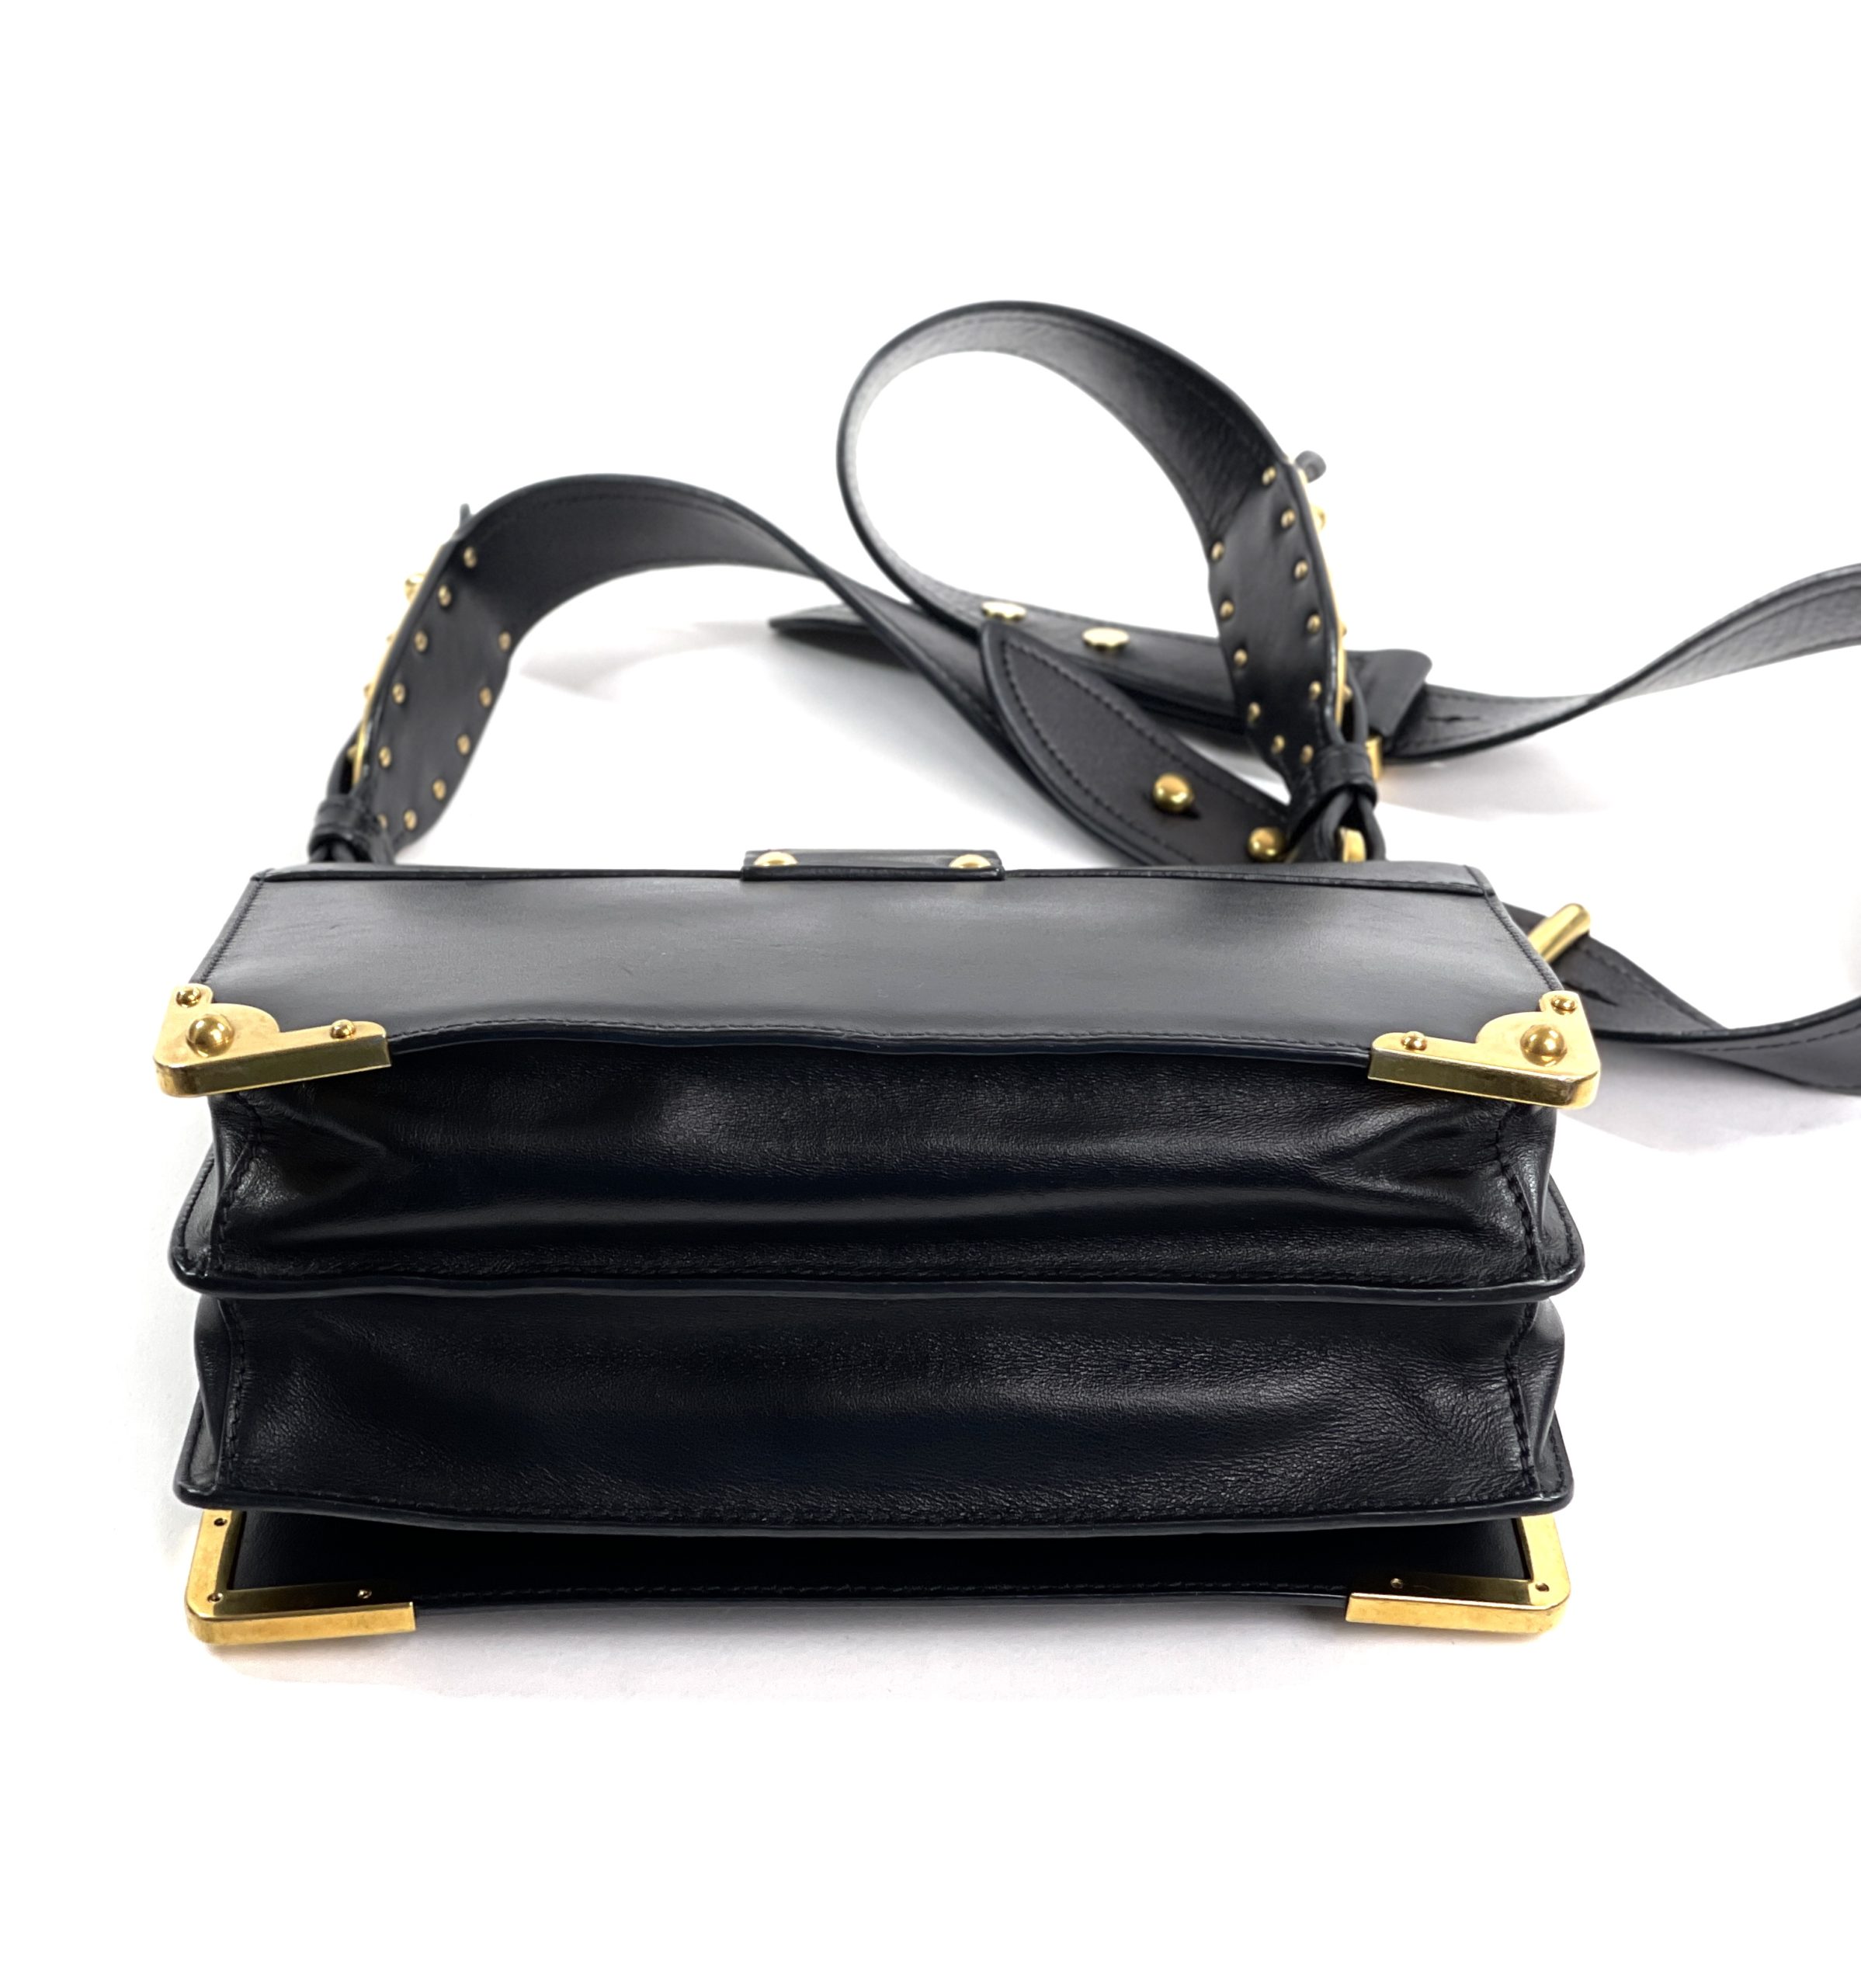 Prada Cahier shoulder bag - ShopStyle